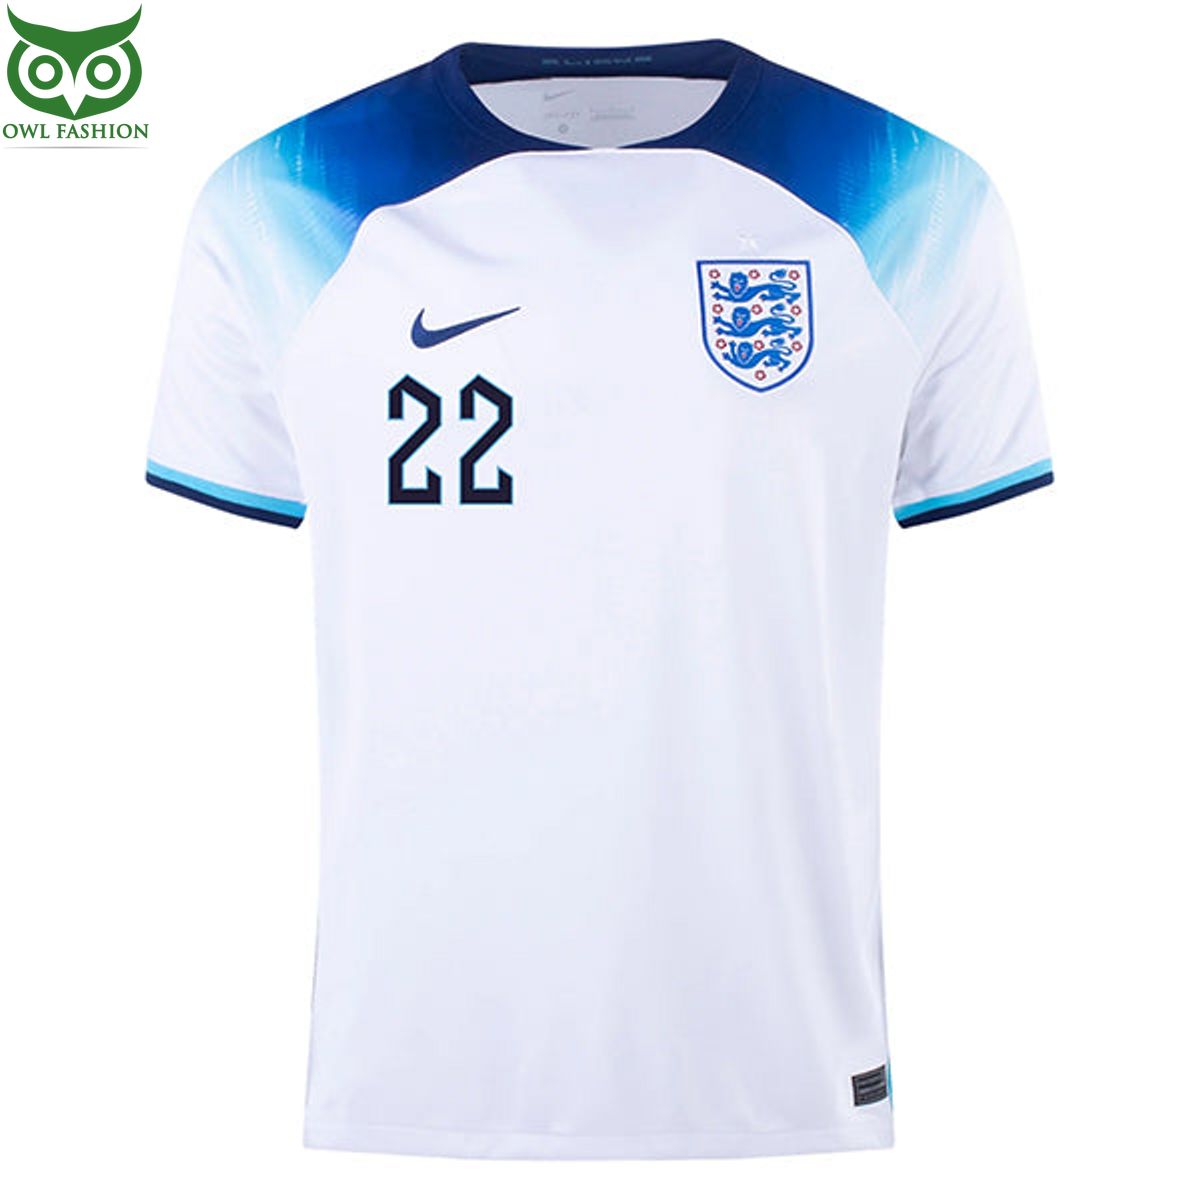 bellingham real madrid football soccer jersey shirt blue version Shop Owl Fashion